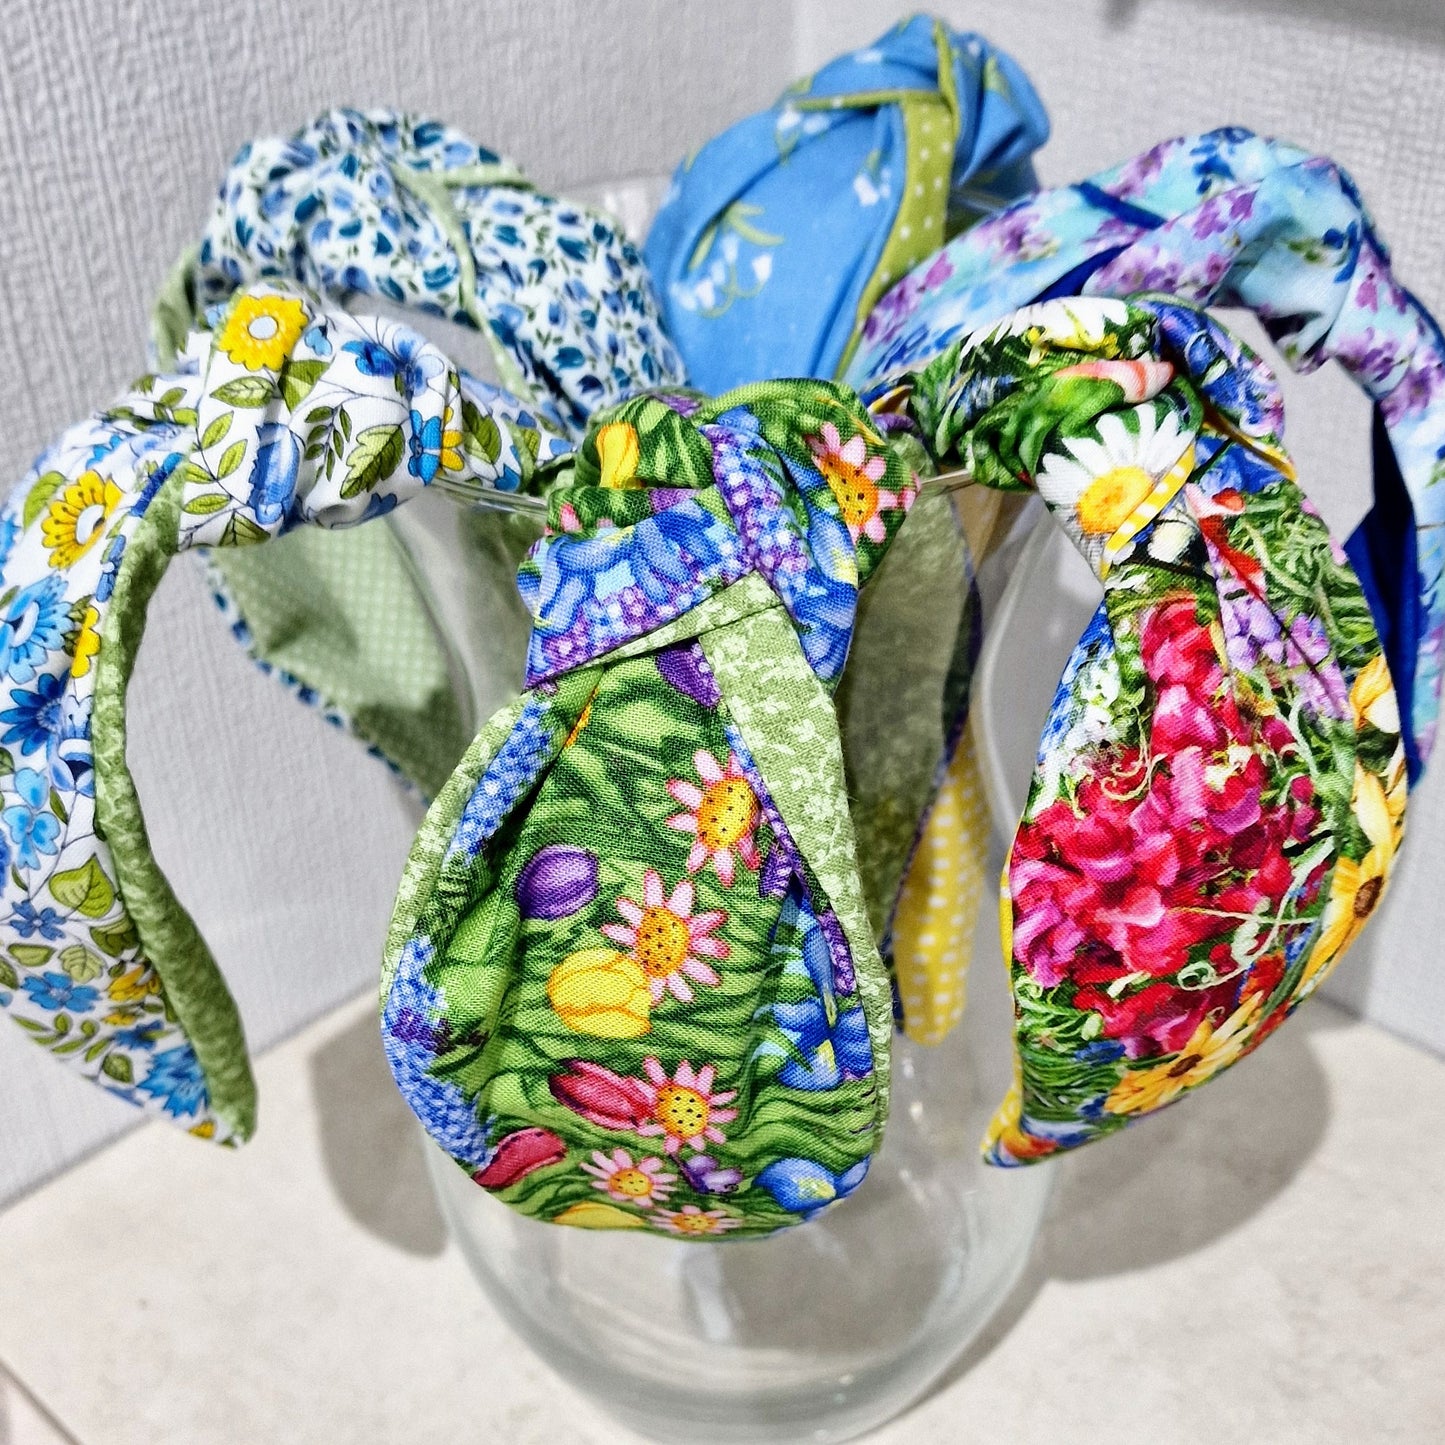 Spring Flowers Daisies Butterflies Bluebells Cotton Fabric Headband Hairband Knot Twist